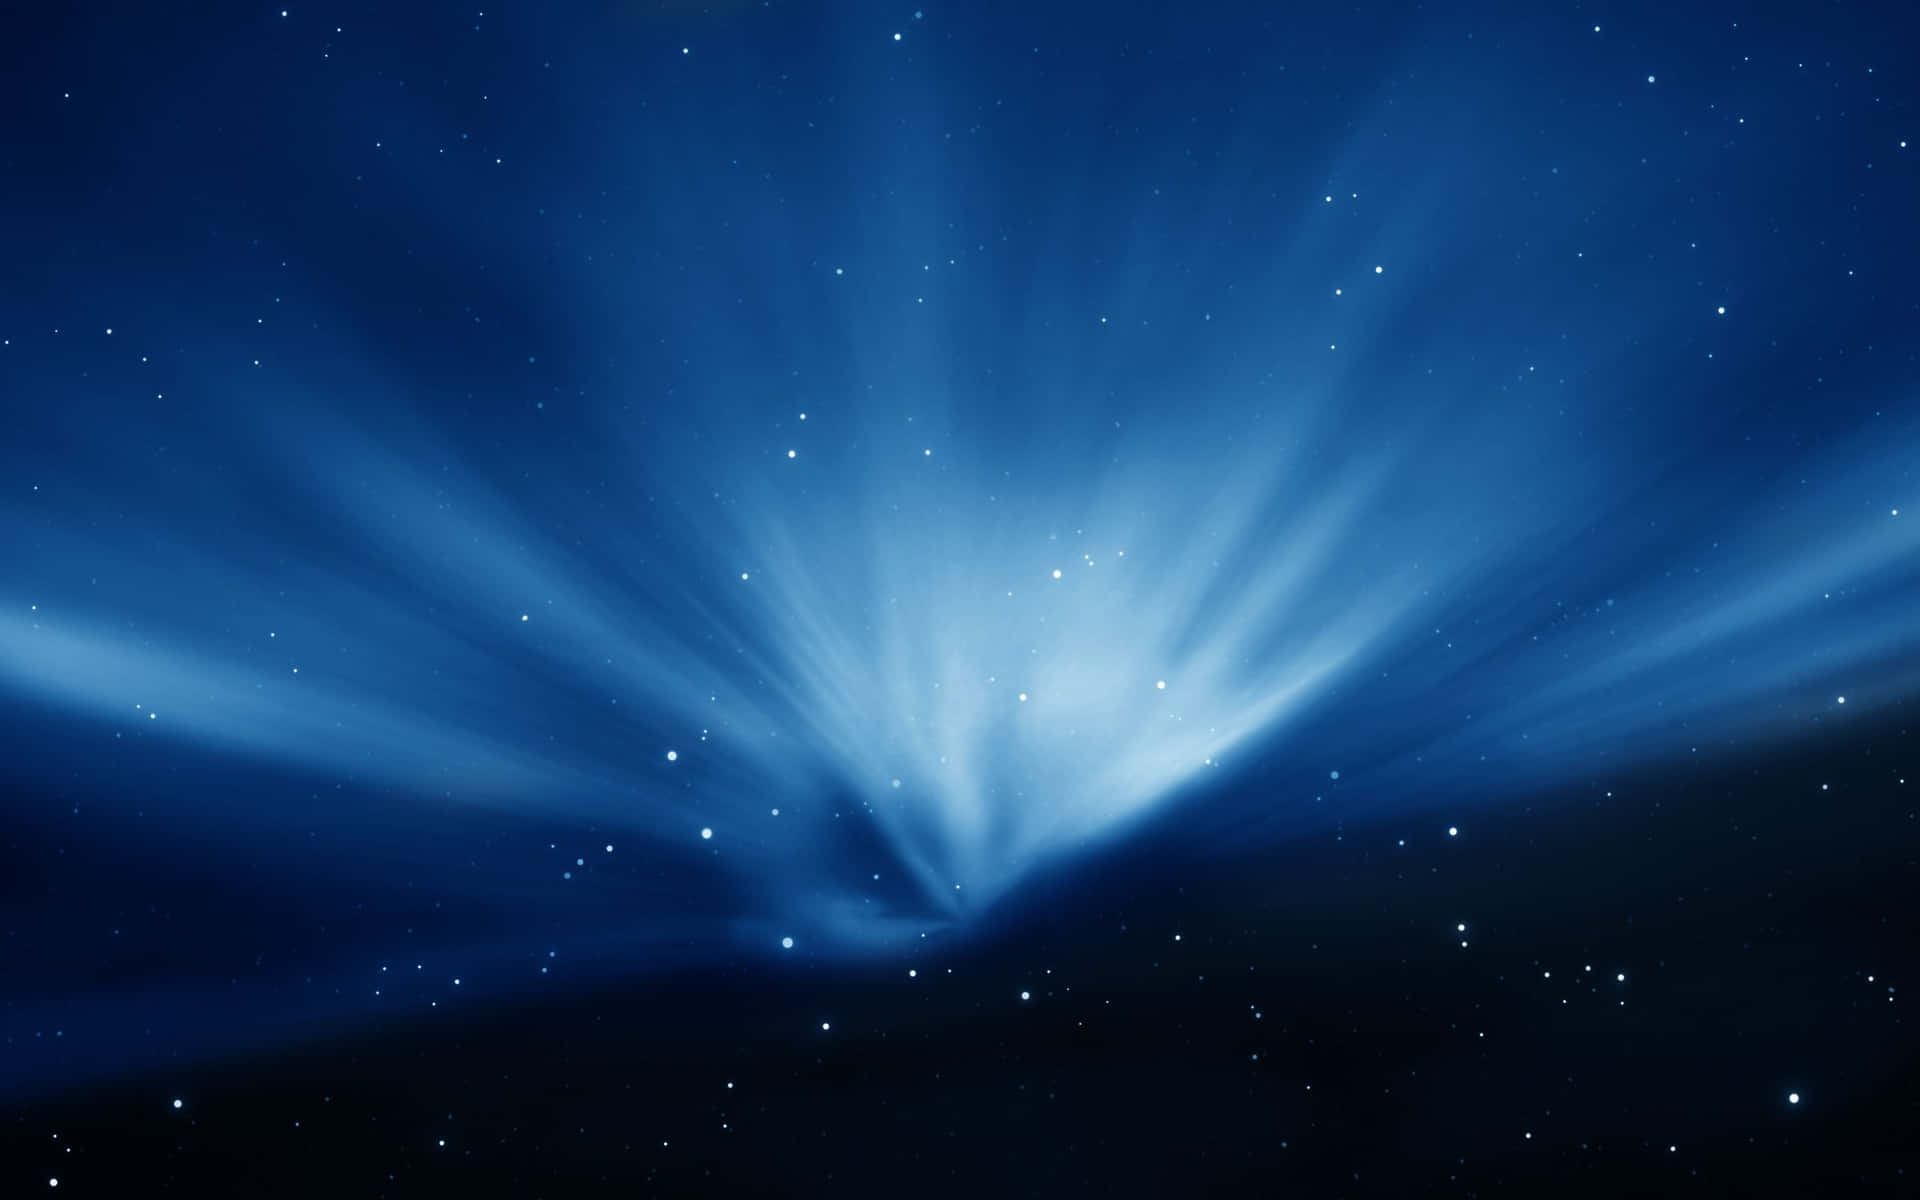 A beautiful Dark Blue Star shining brightly in the night sky Wallpaper